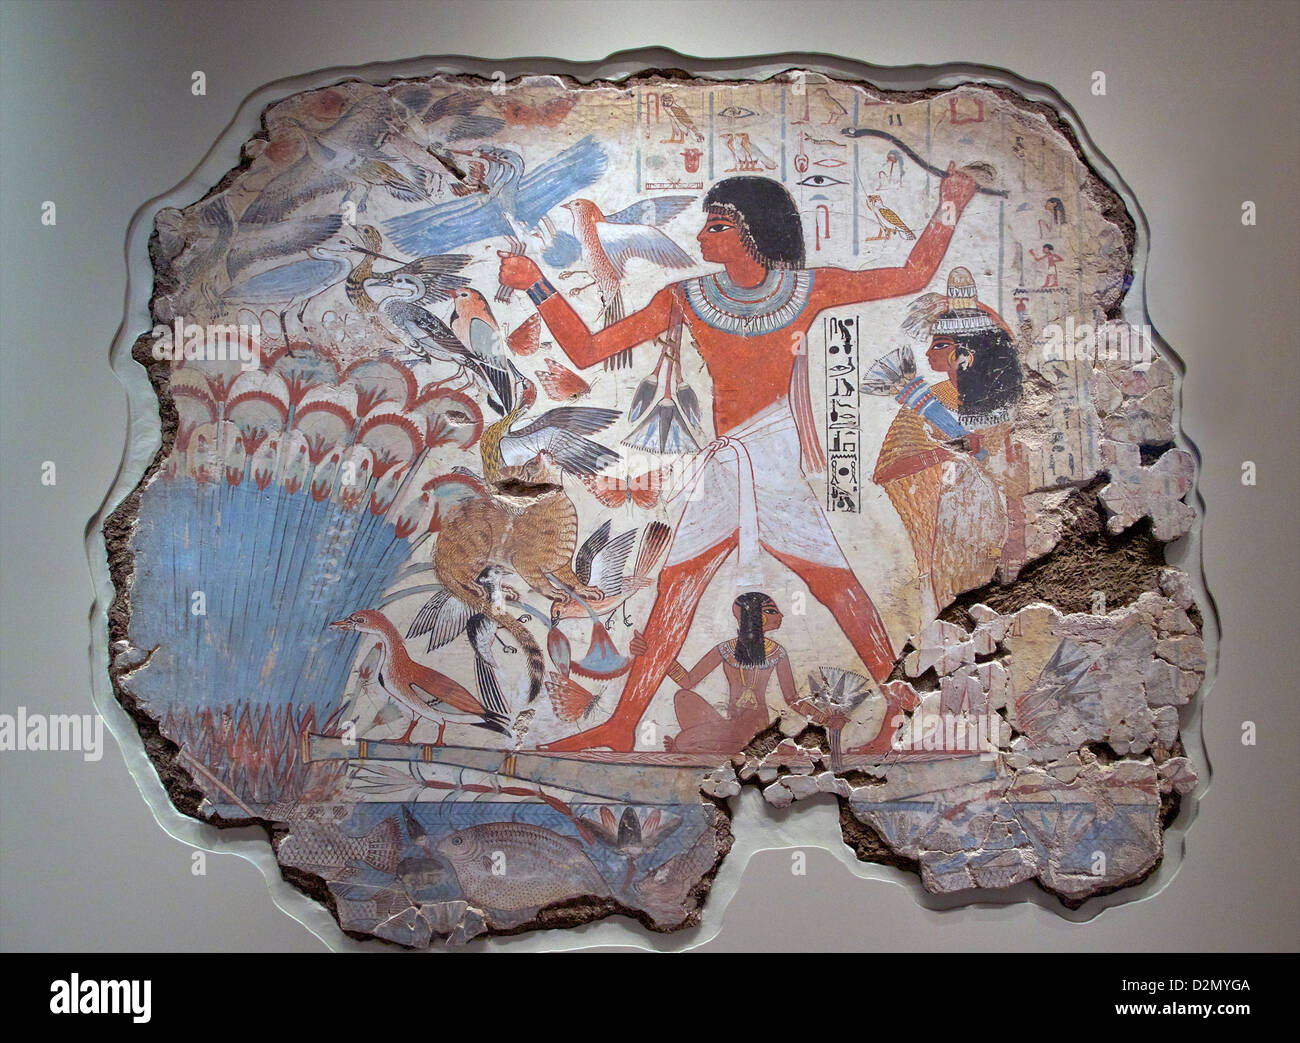 Nebamun caza en las marismas, Templo de Amun, Tebas, Egipto, Museo Británico, Londres, Inglaterra, Reino Unido, GB, Islas Británicas Foto de stock